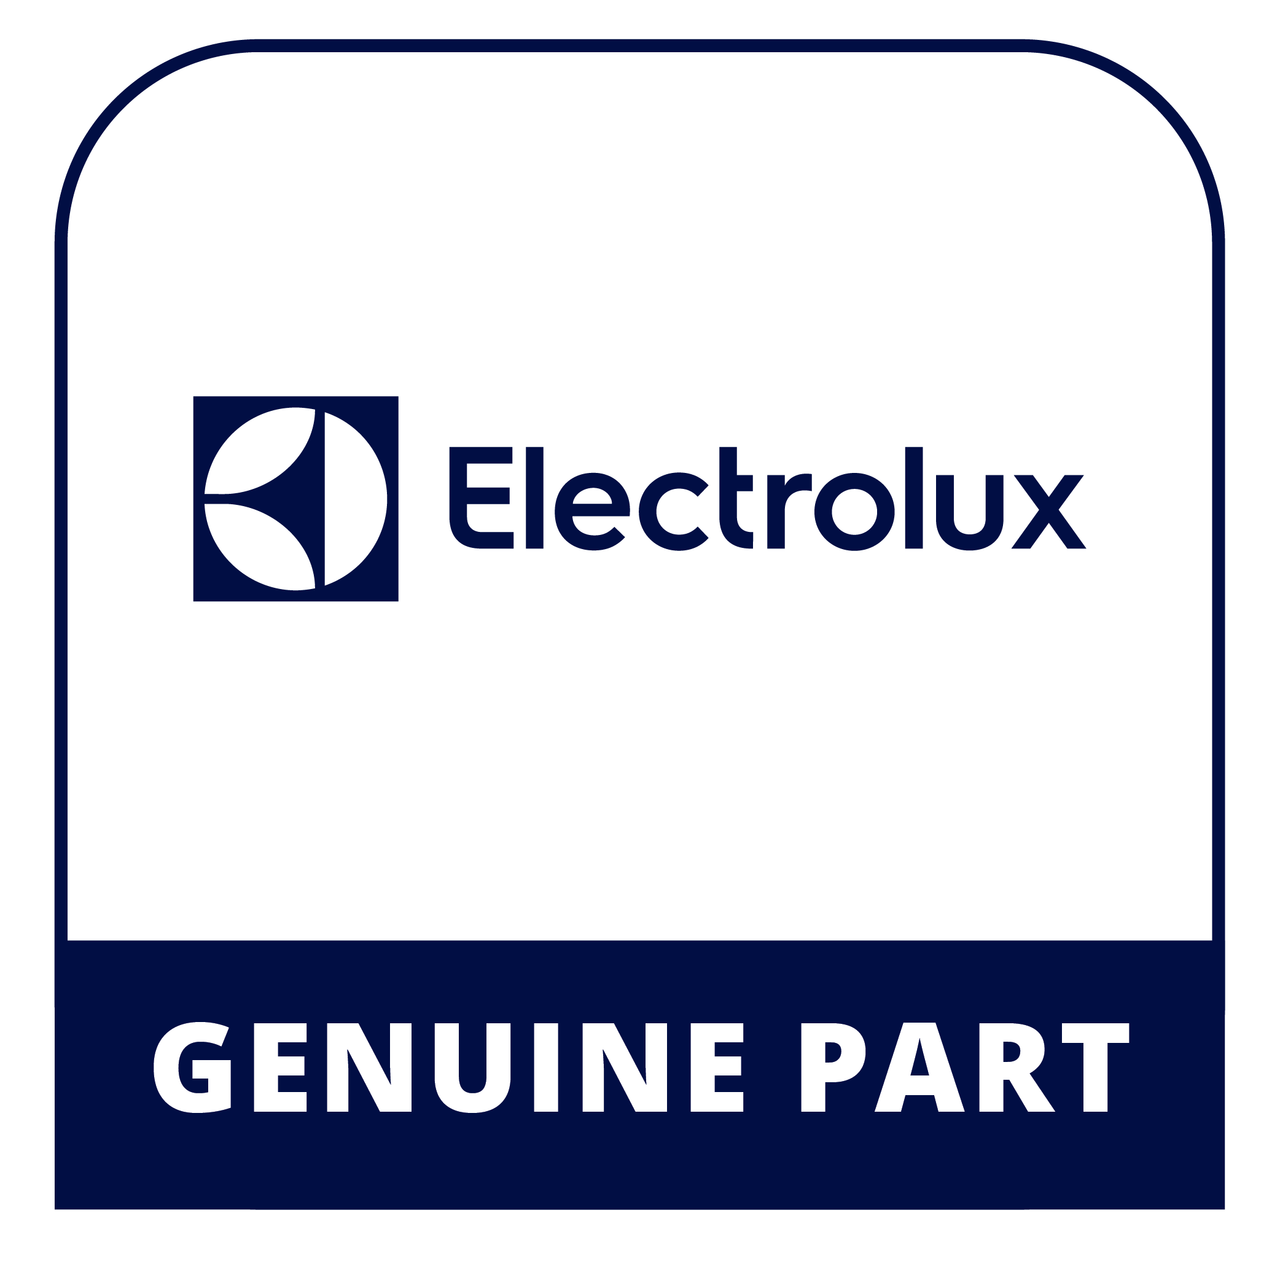 Frigidaire - Electrolux 5304461115 Motor - Genuine Electrolux Part